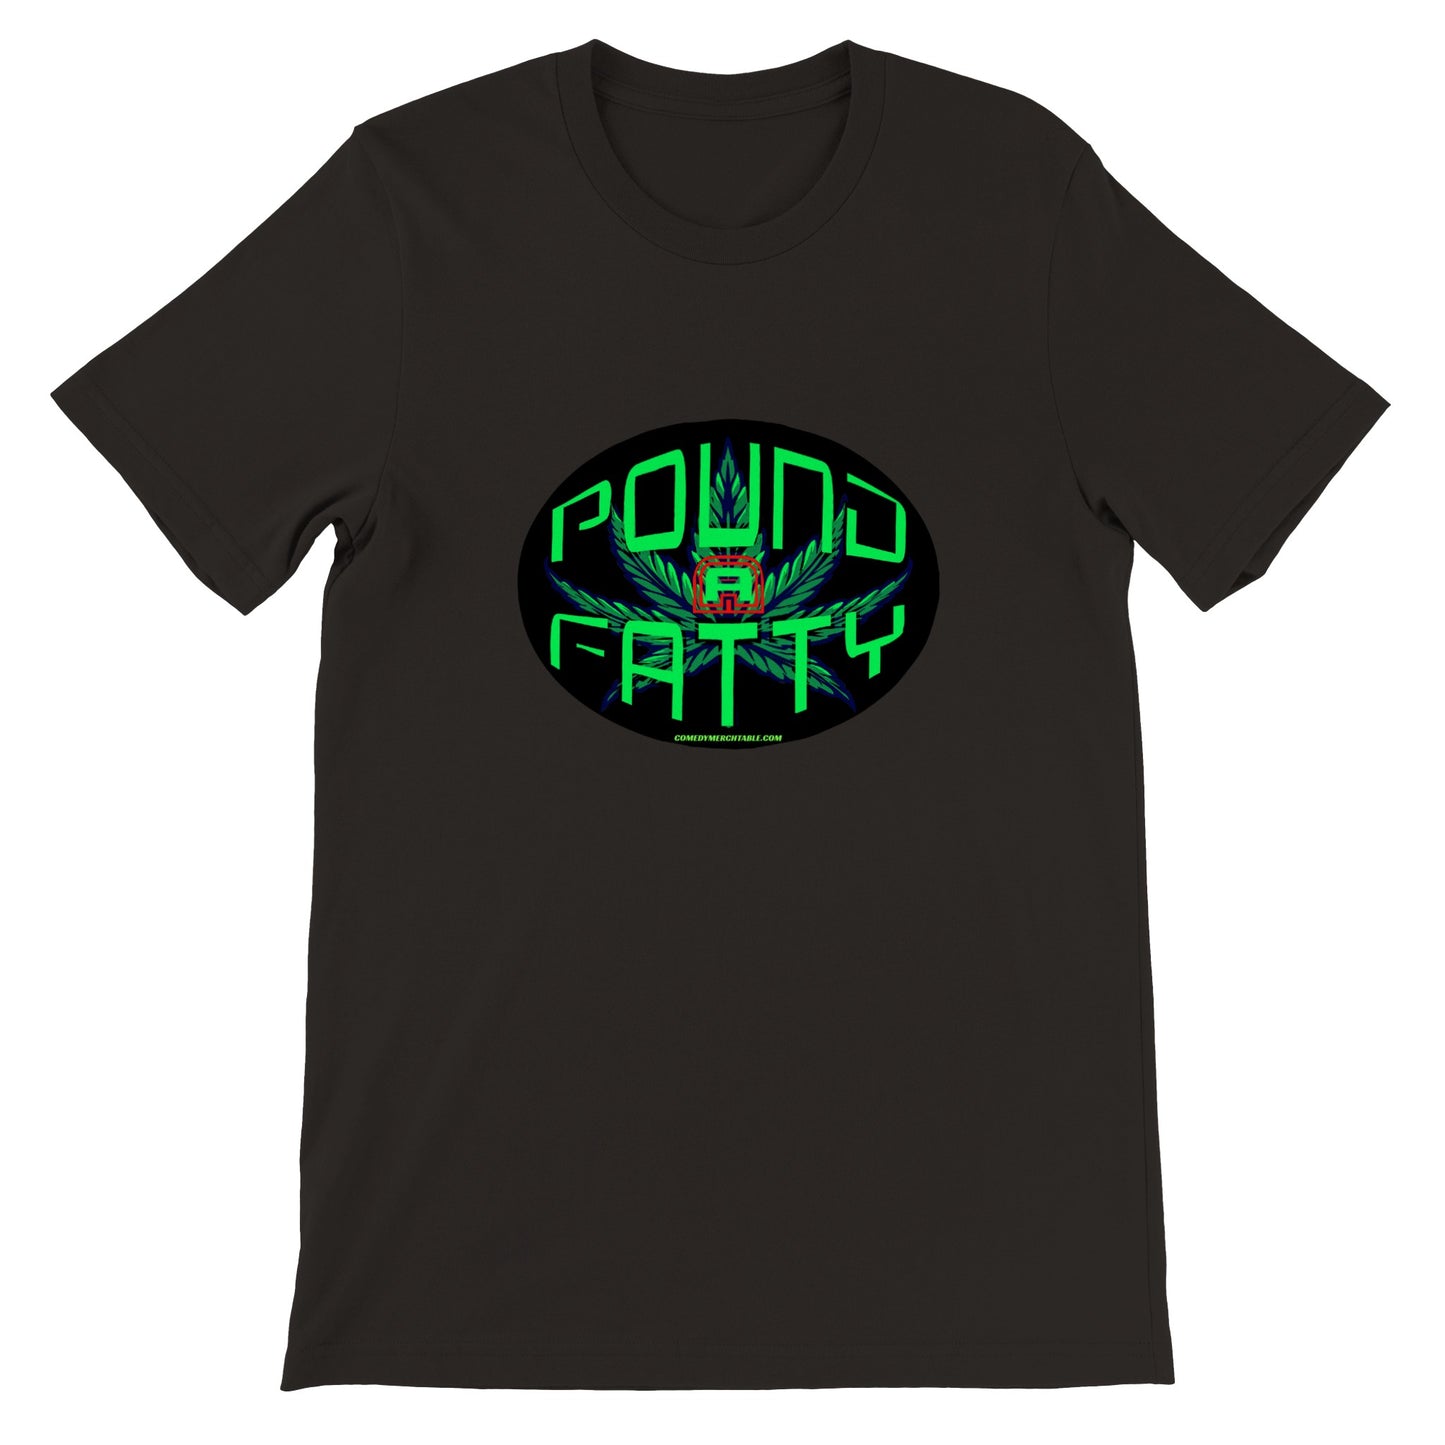 Chuck Byrn "Pound a Fatty" - Premium Unisex Crewneck T-shirt